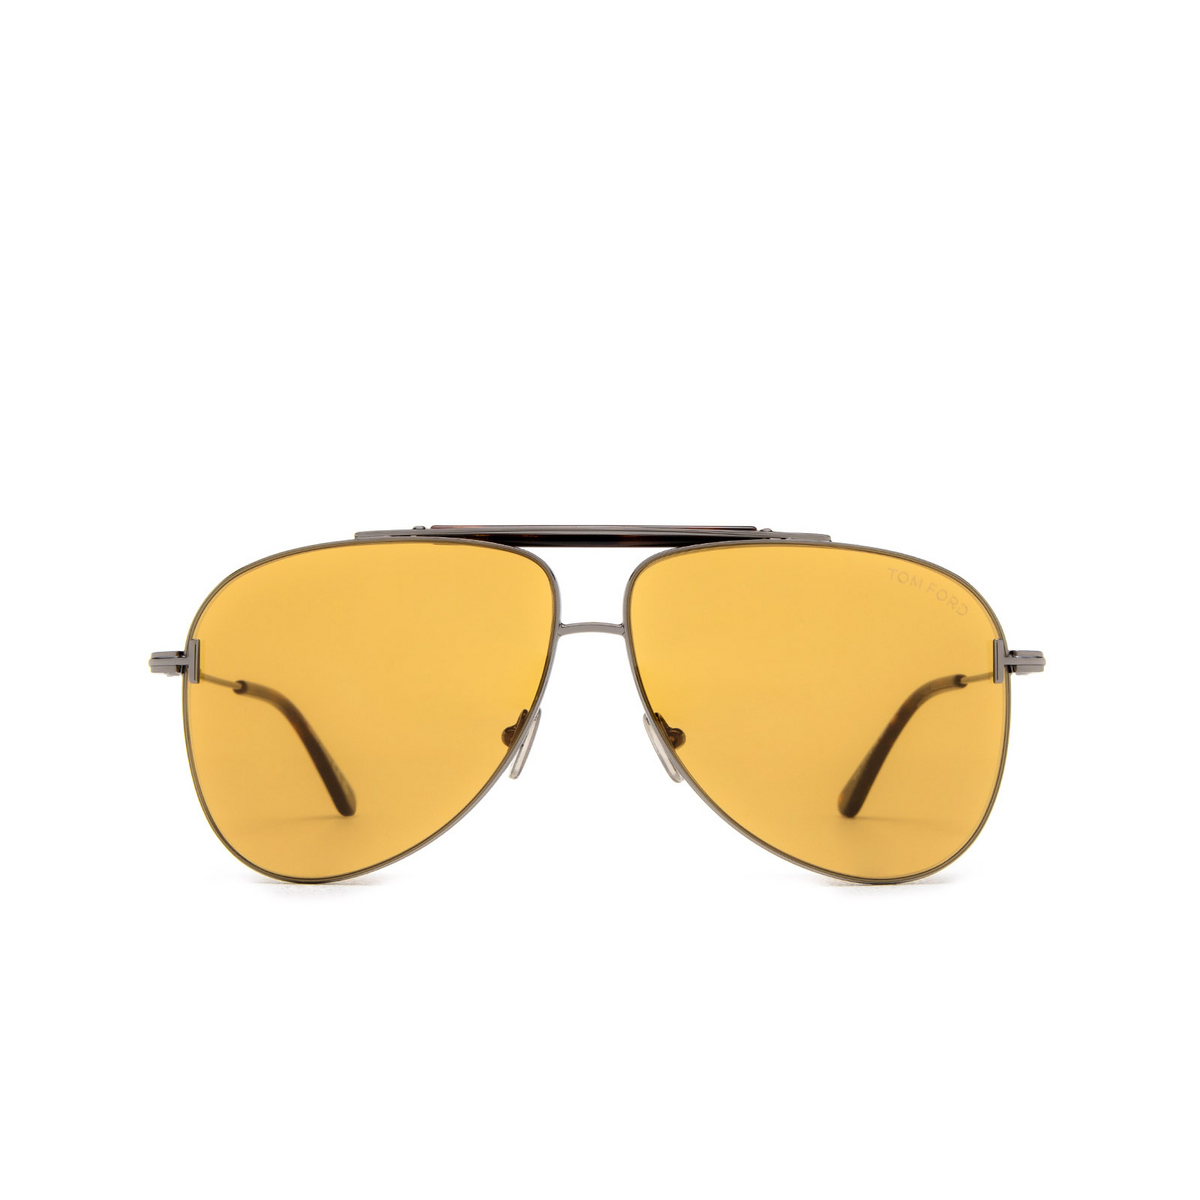 Tom Ford BRADY Sunglasses 08E Shiny Gunmetal - front view